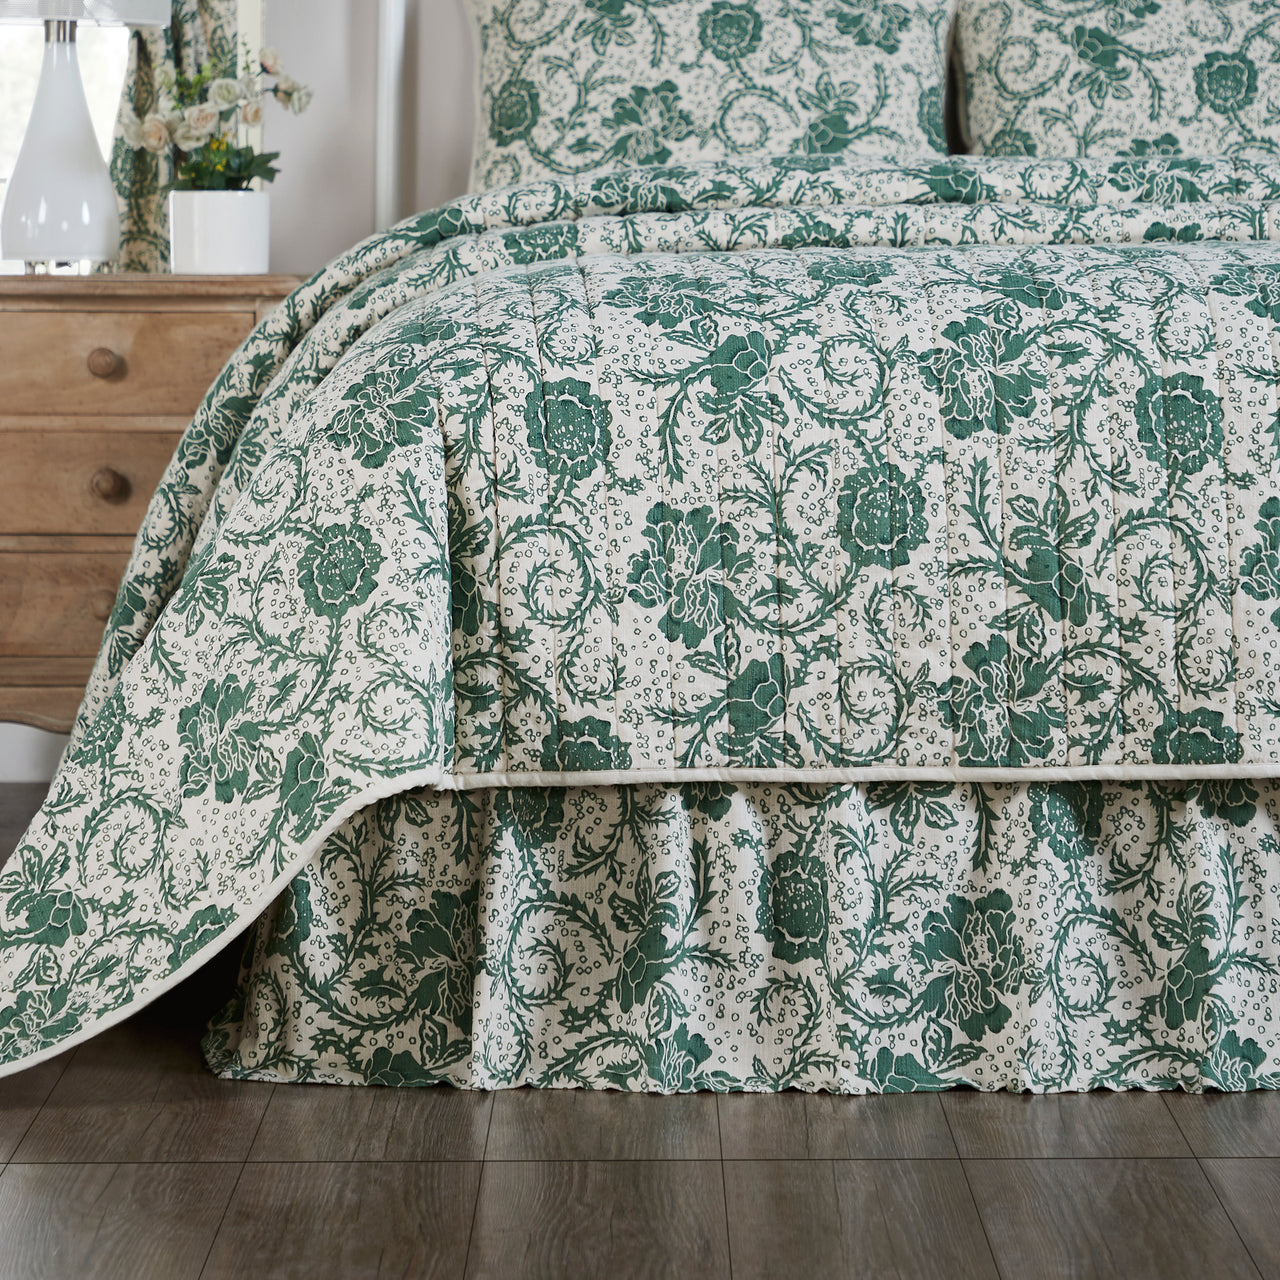 Dorset Green Floral King Bed Skirt 78x80x16 VHC Brands